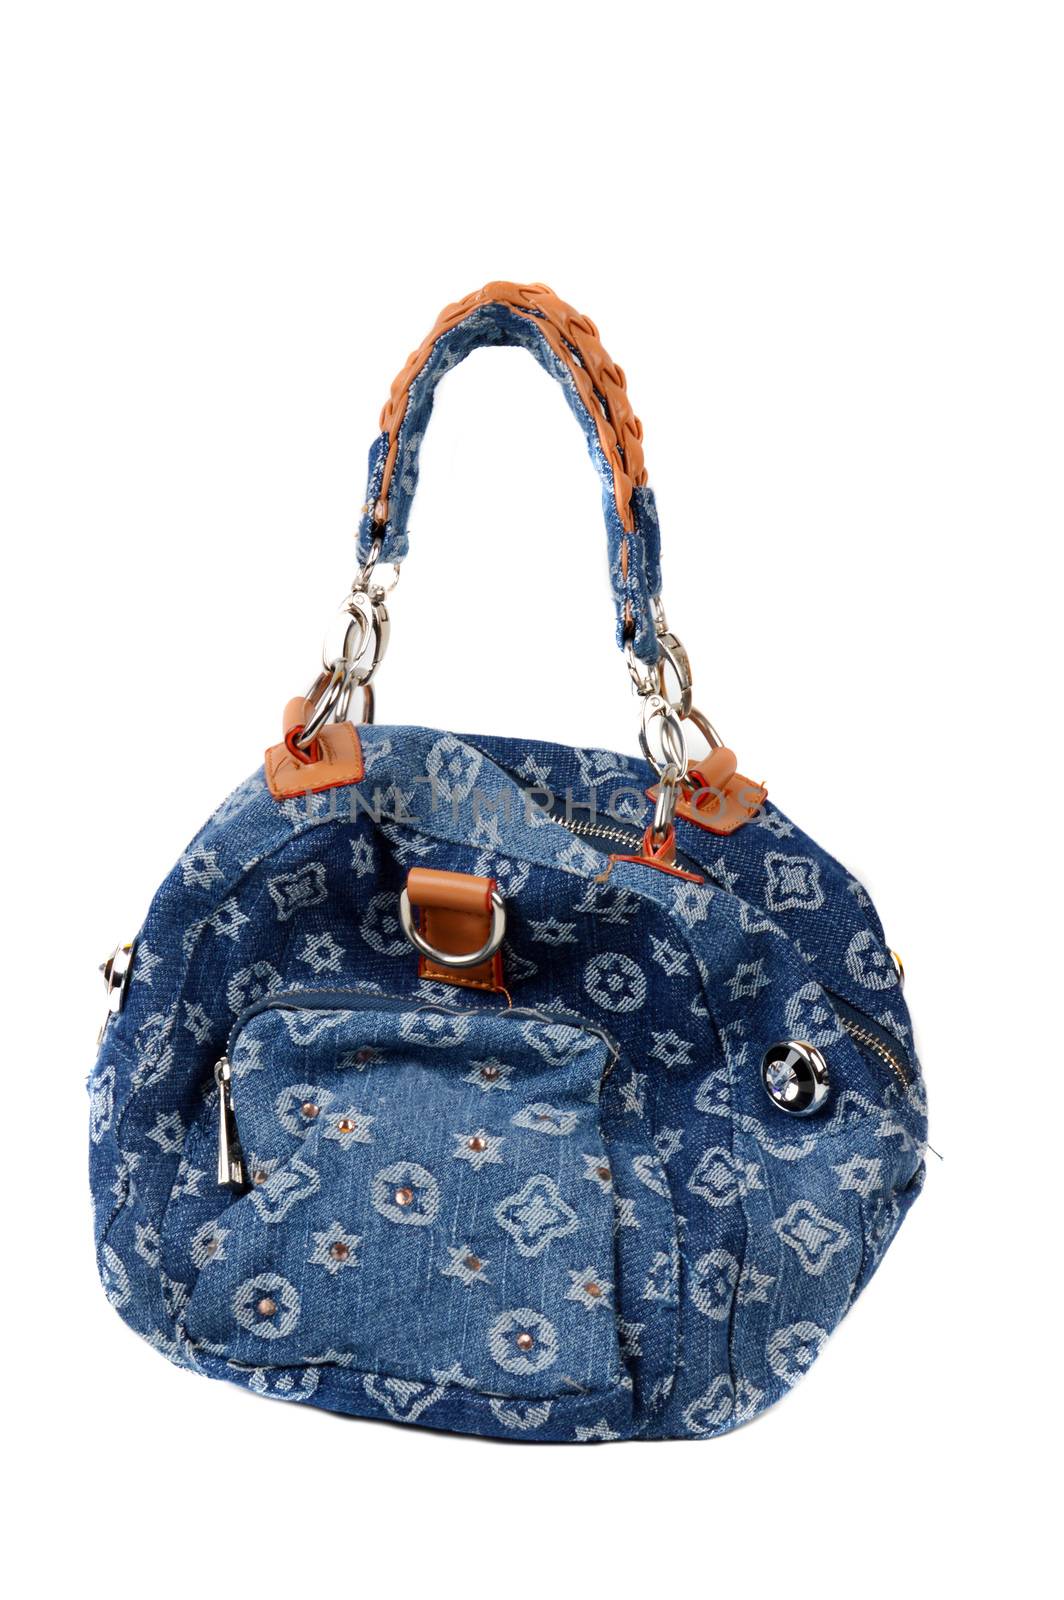 blue denim handbag on white background